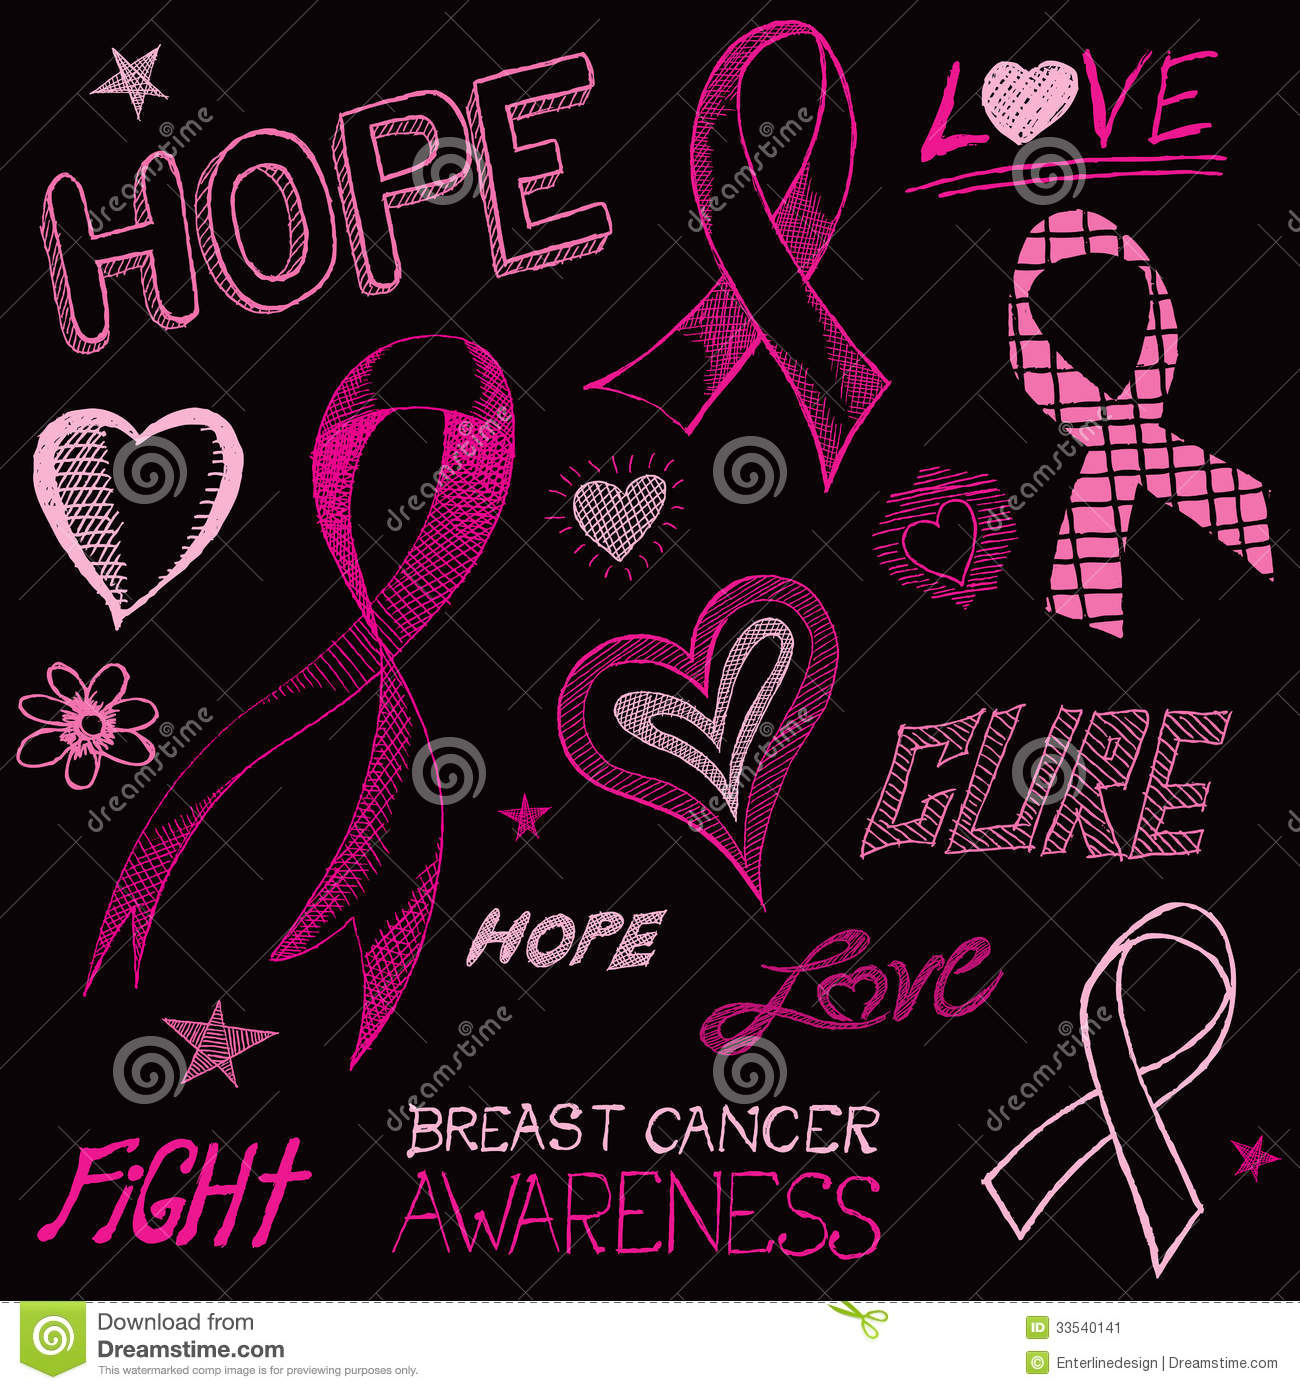 Breast Cancer Awareness Cover Photos Sketch